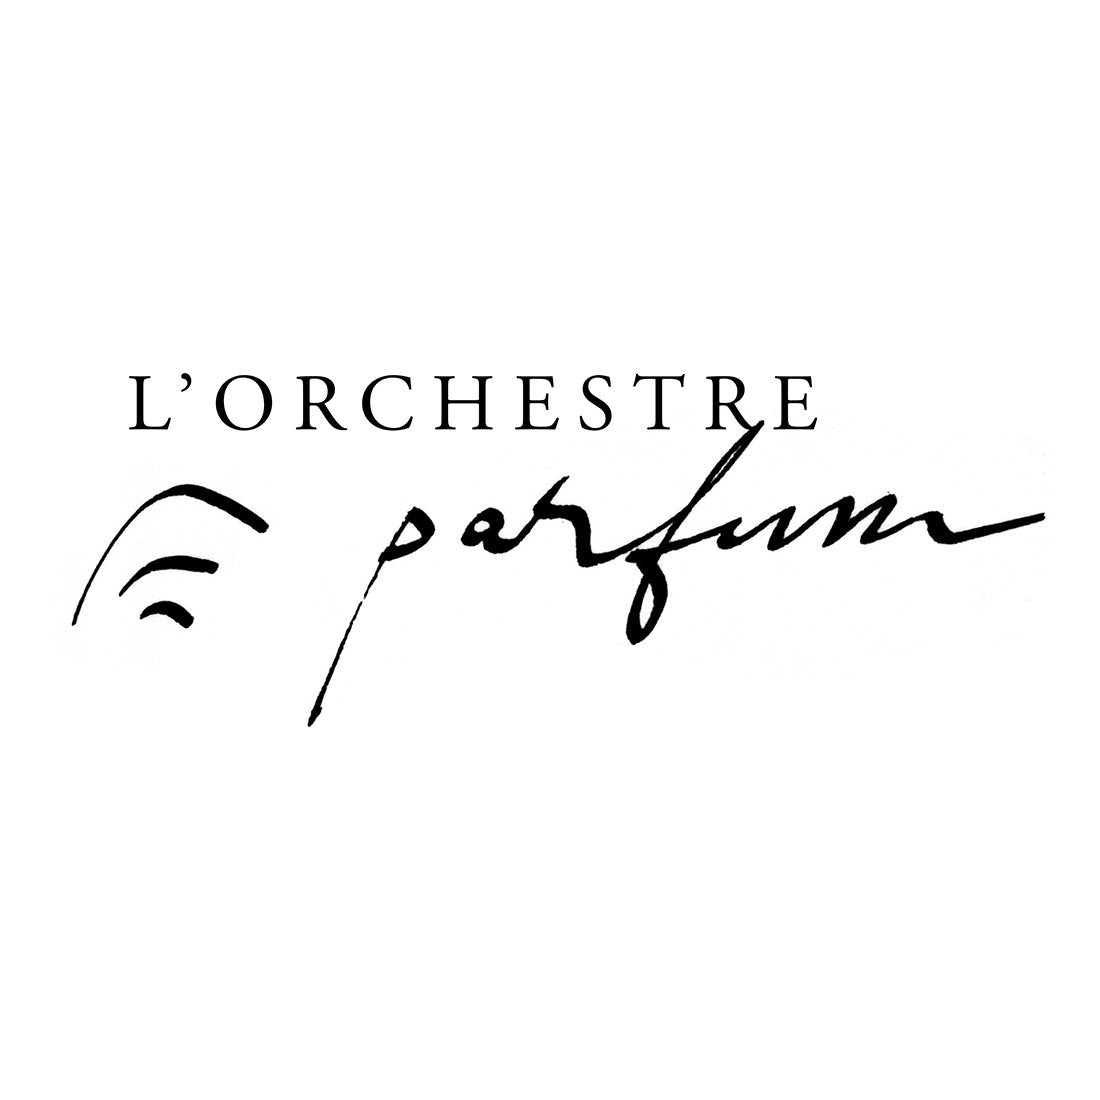 L'orchestre-Logo